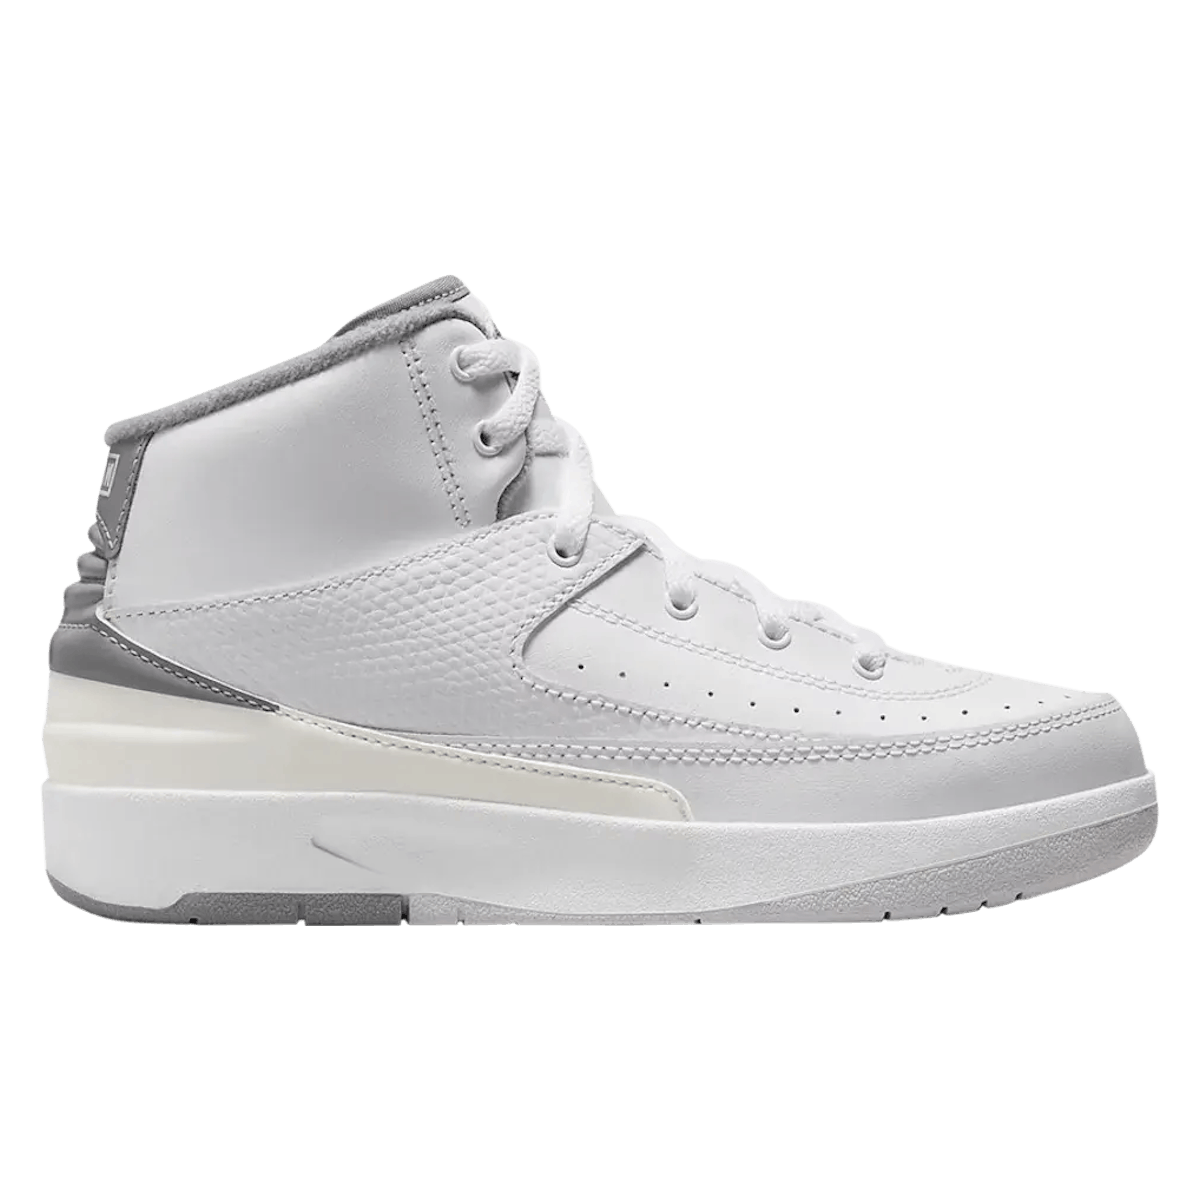 Air Jordan 2 Retro PS "White and Cement Grey"